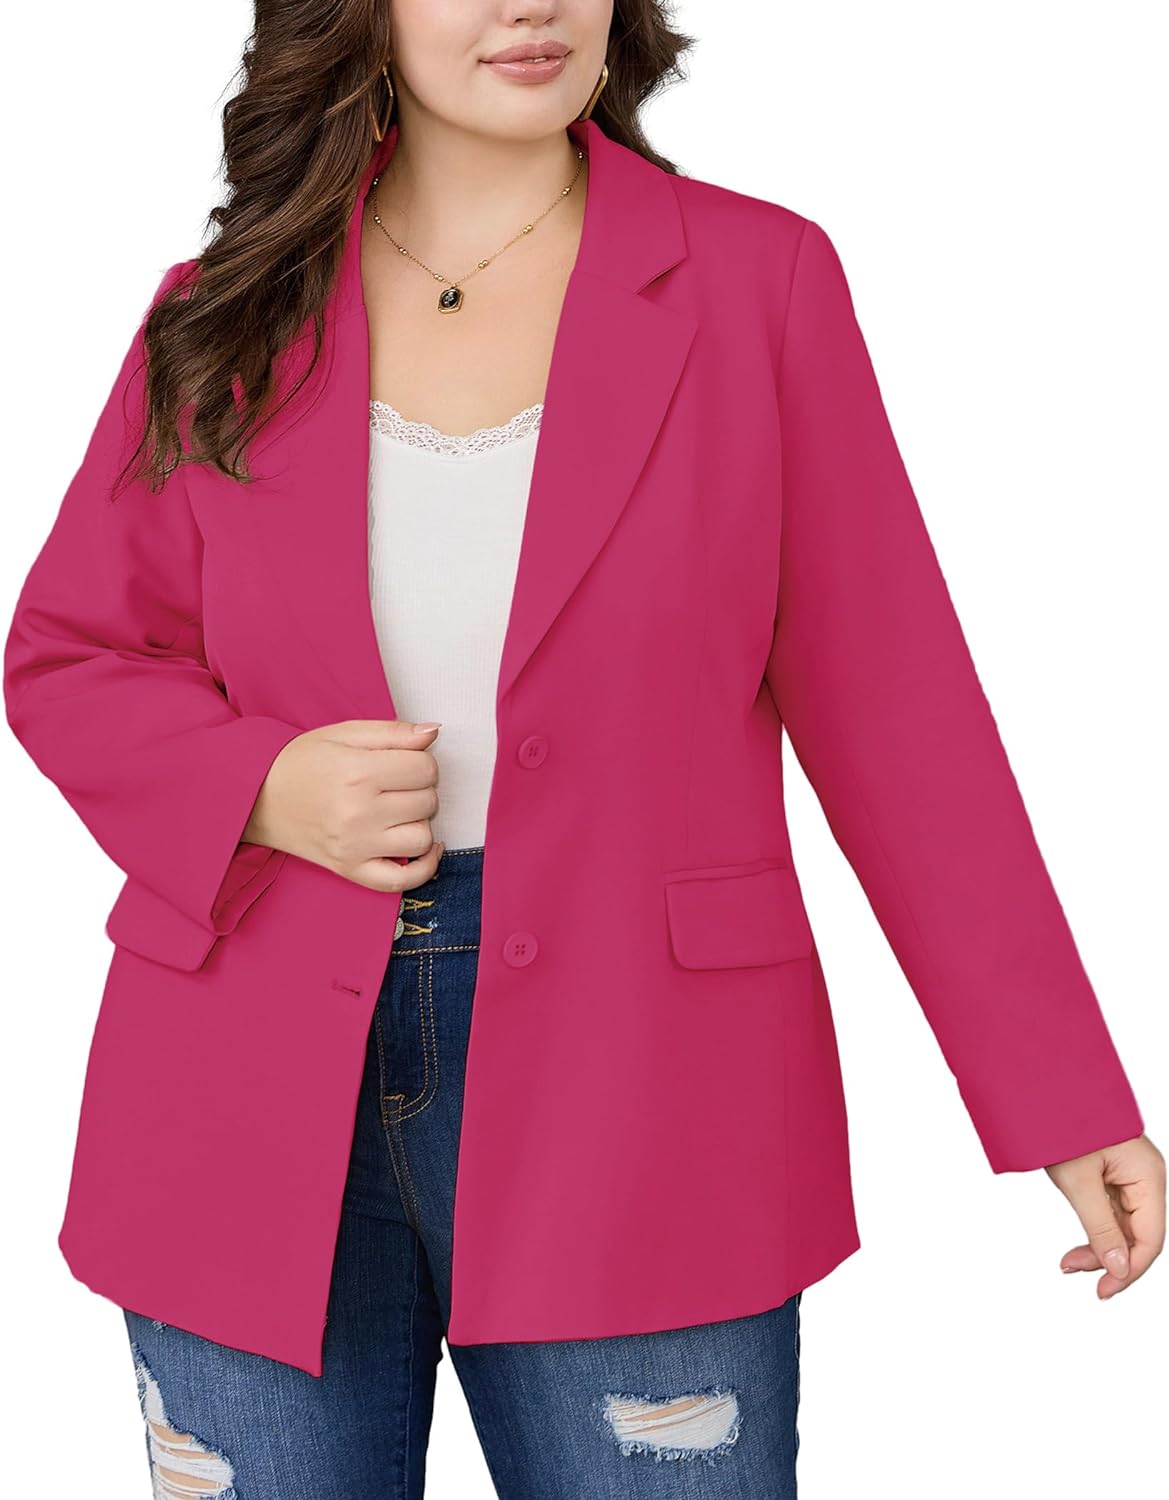 Hanna Nikole Women's Plus Size Casual Blazer 3/4 Sleeve Open Front Work Office Cardigan Jackets with Belt